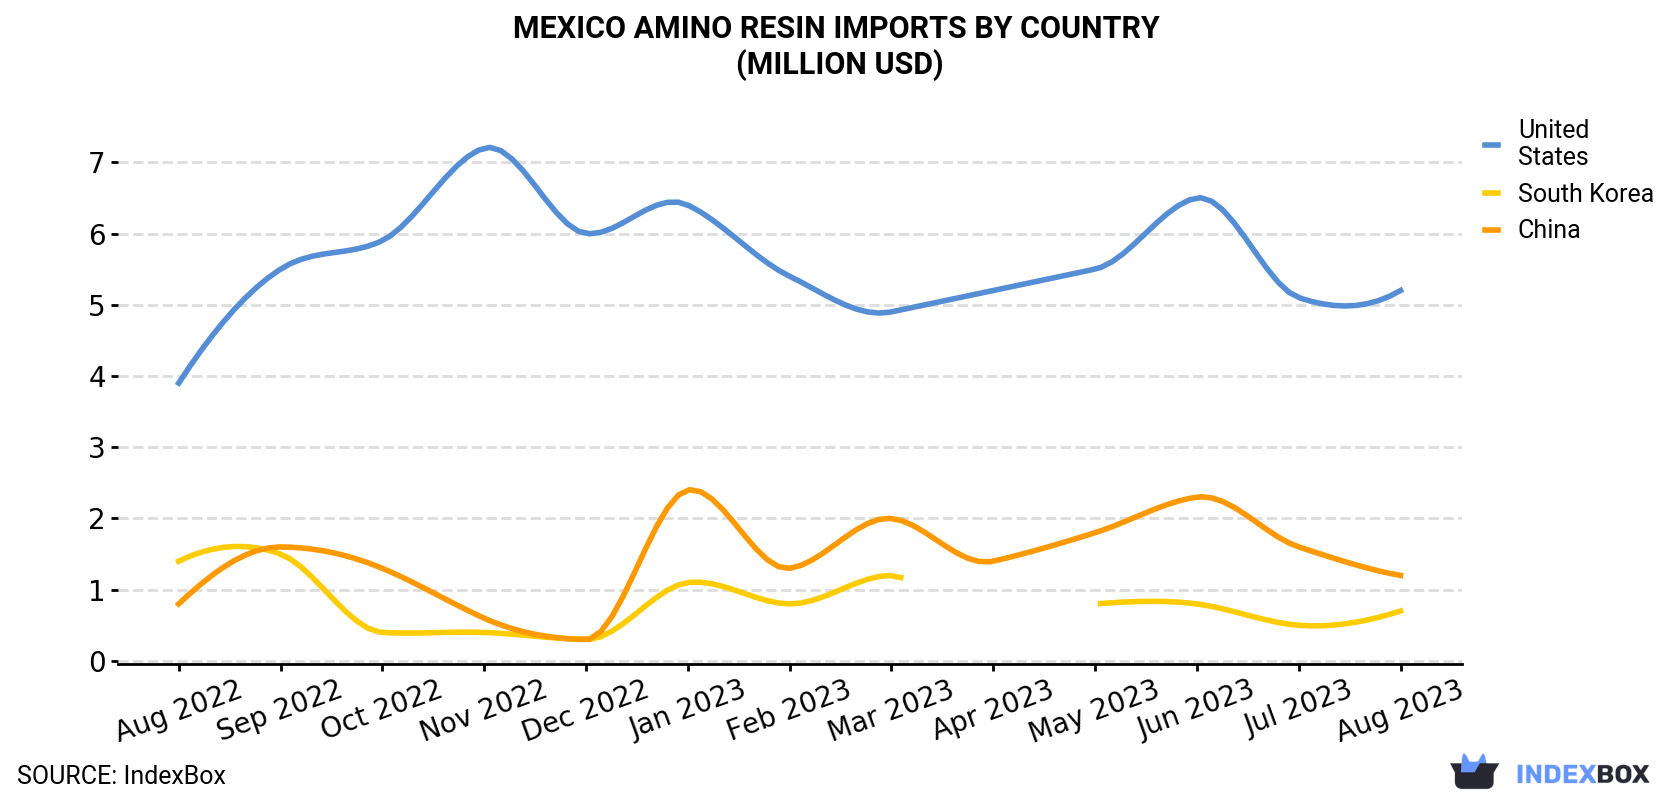 Mexico Amino Resin Imports By Country (Million USD)